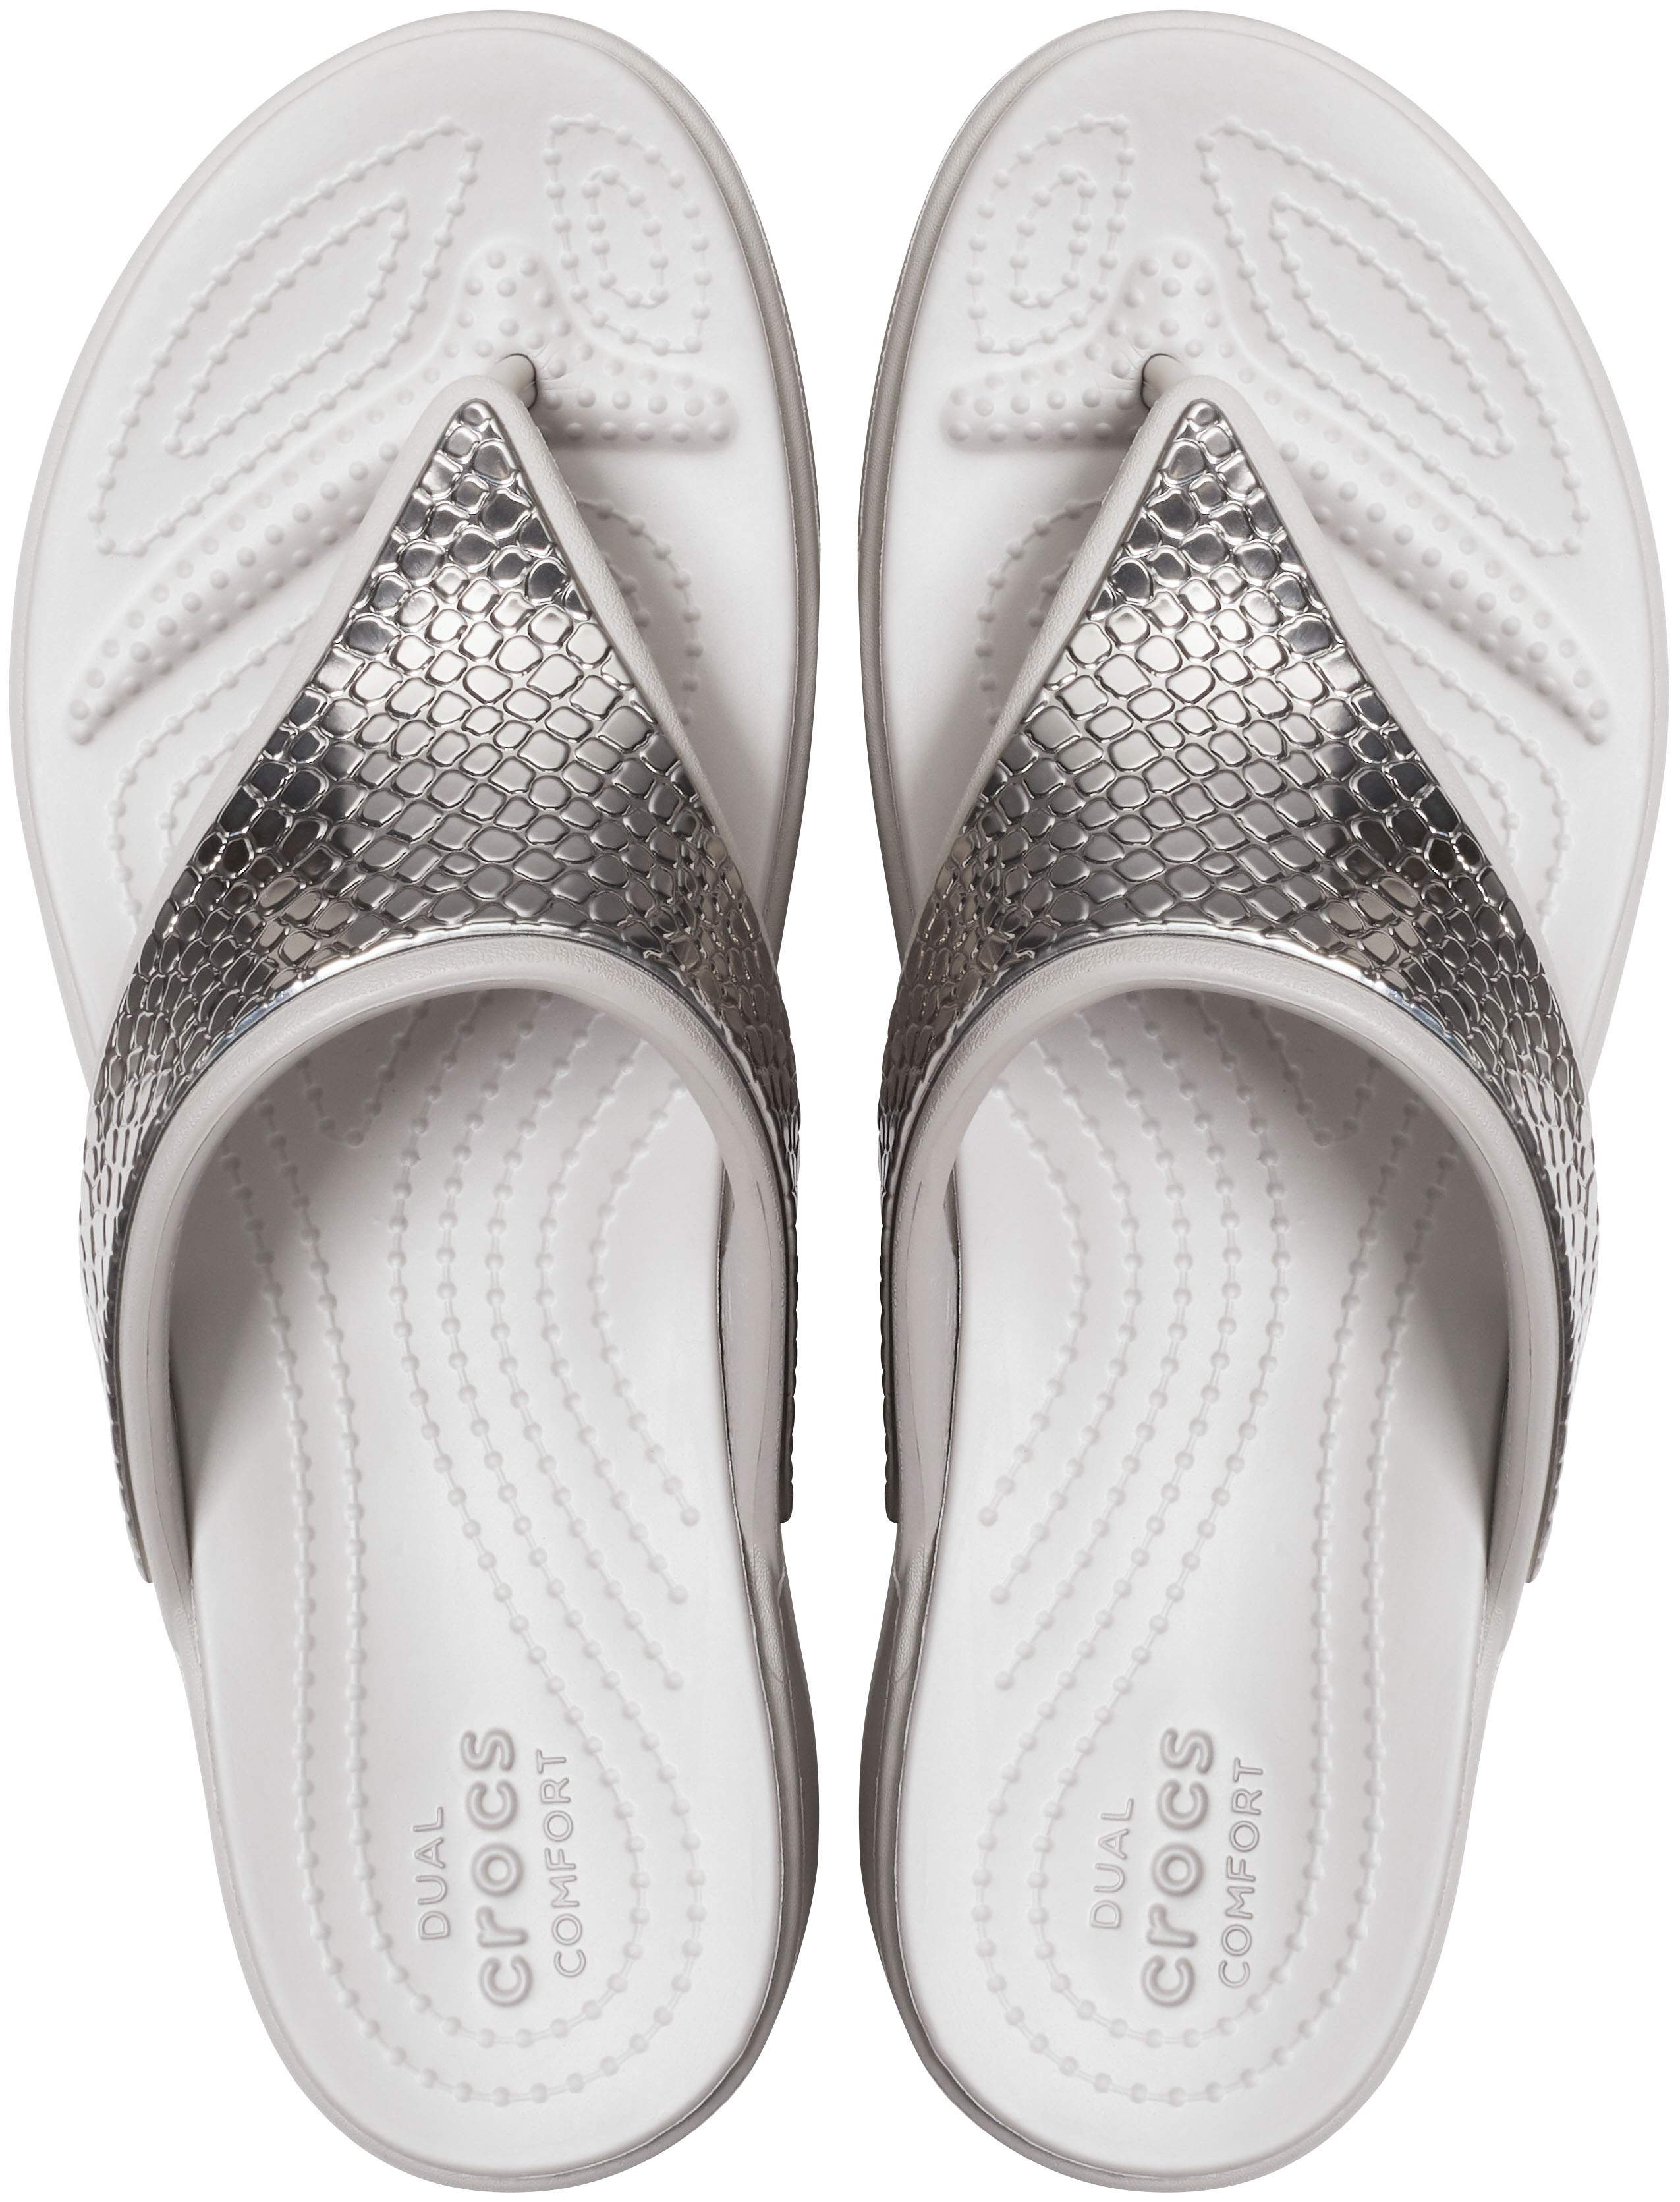 crocs dual comfort slippers